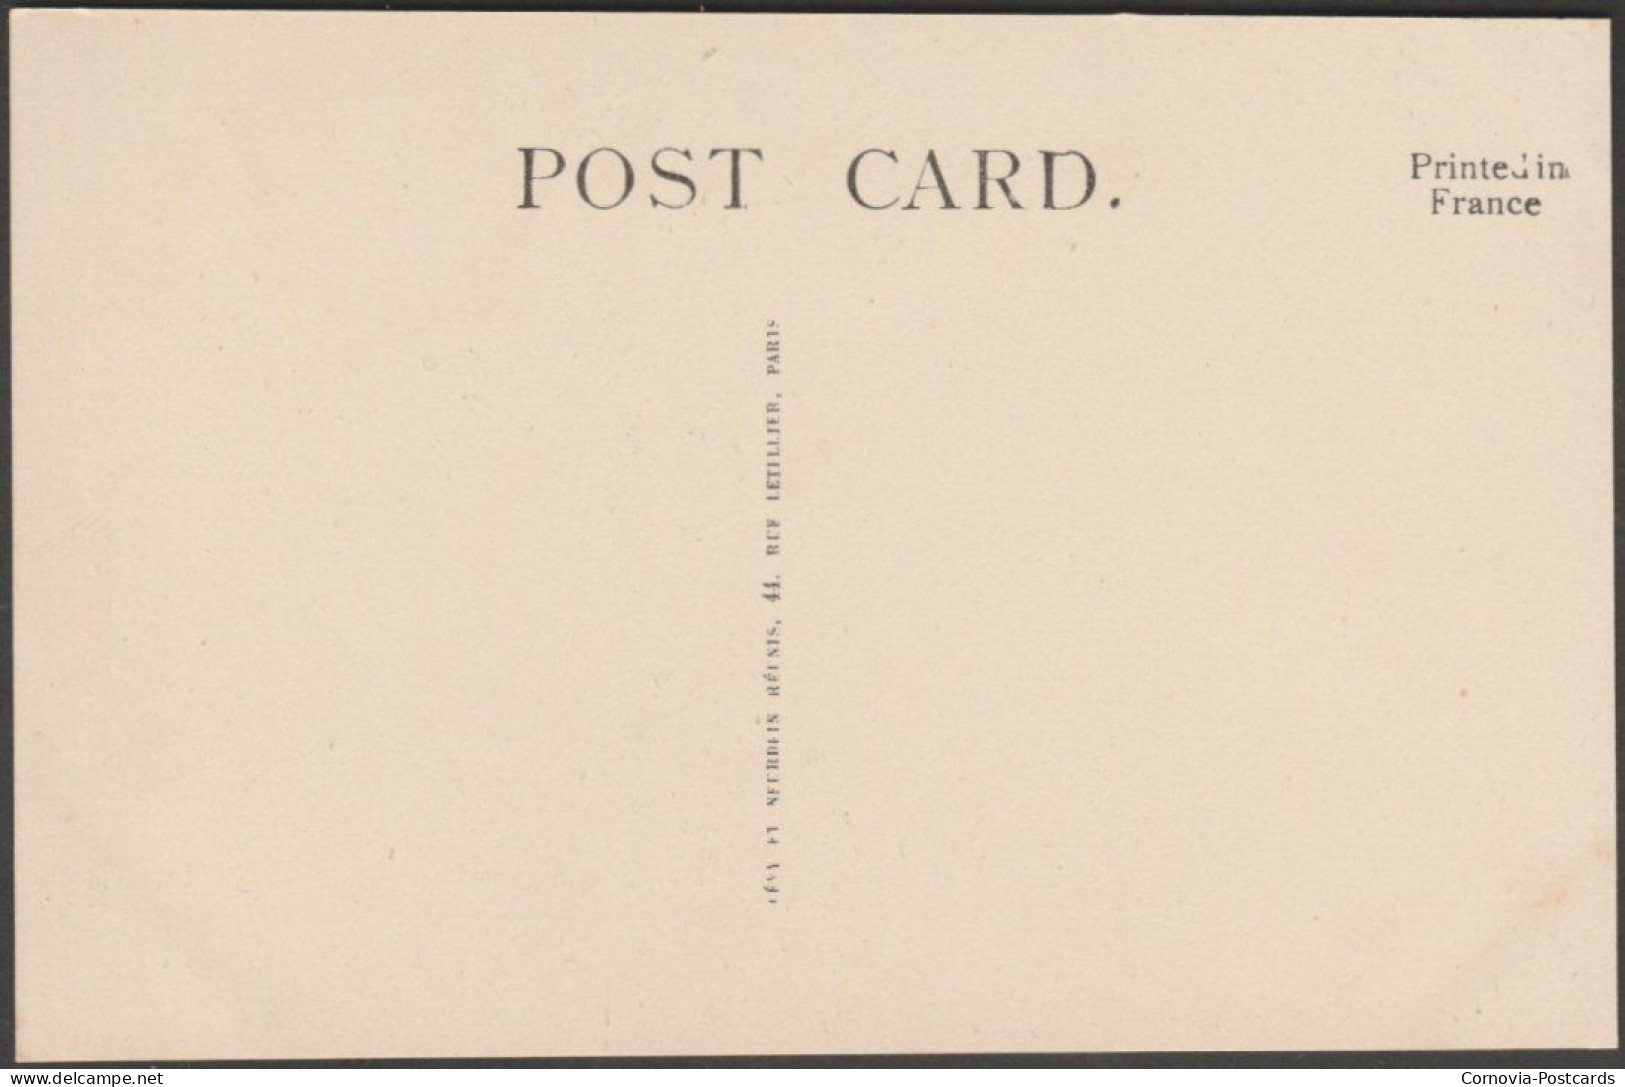 Butchery Lane, Canterbury, Kent, C.1920 - Lévy Et Neurdein Postcard LL85 - Canterbury